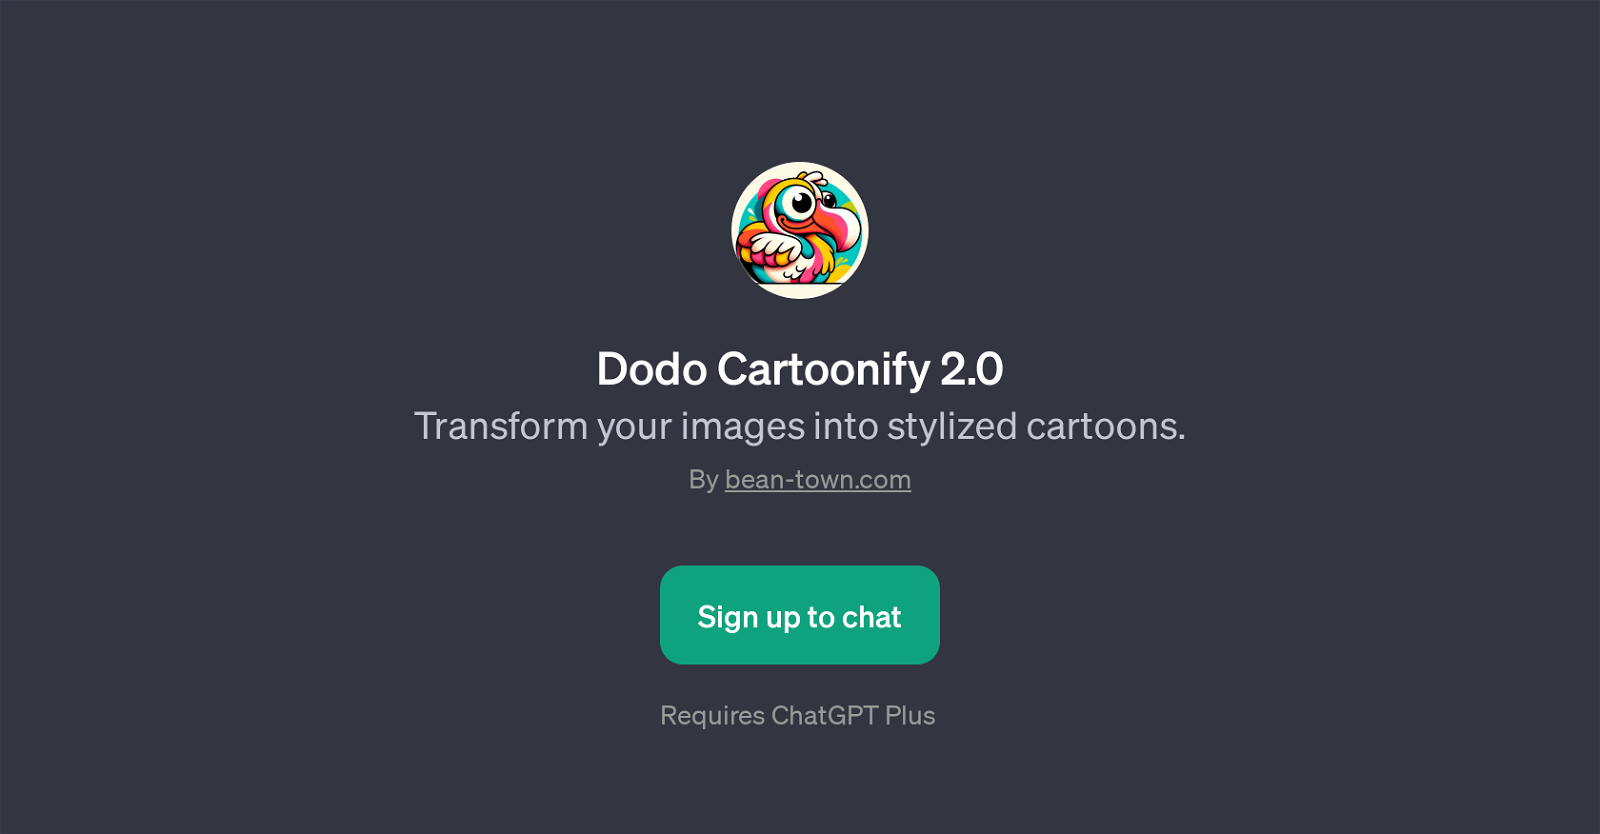 Dodo Cartoonify 2.0 website